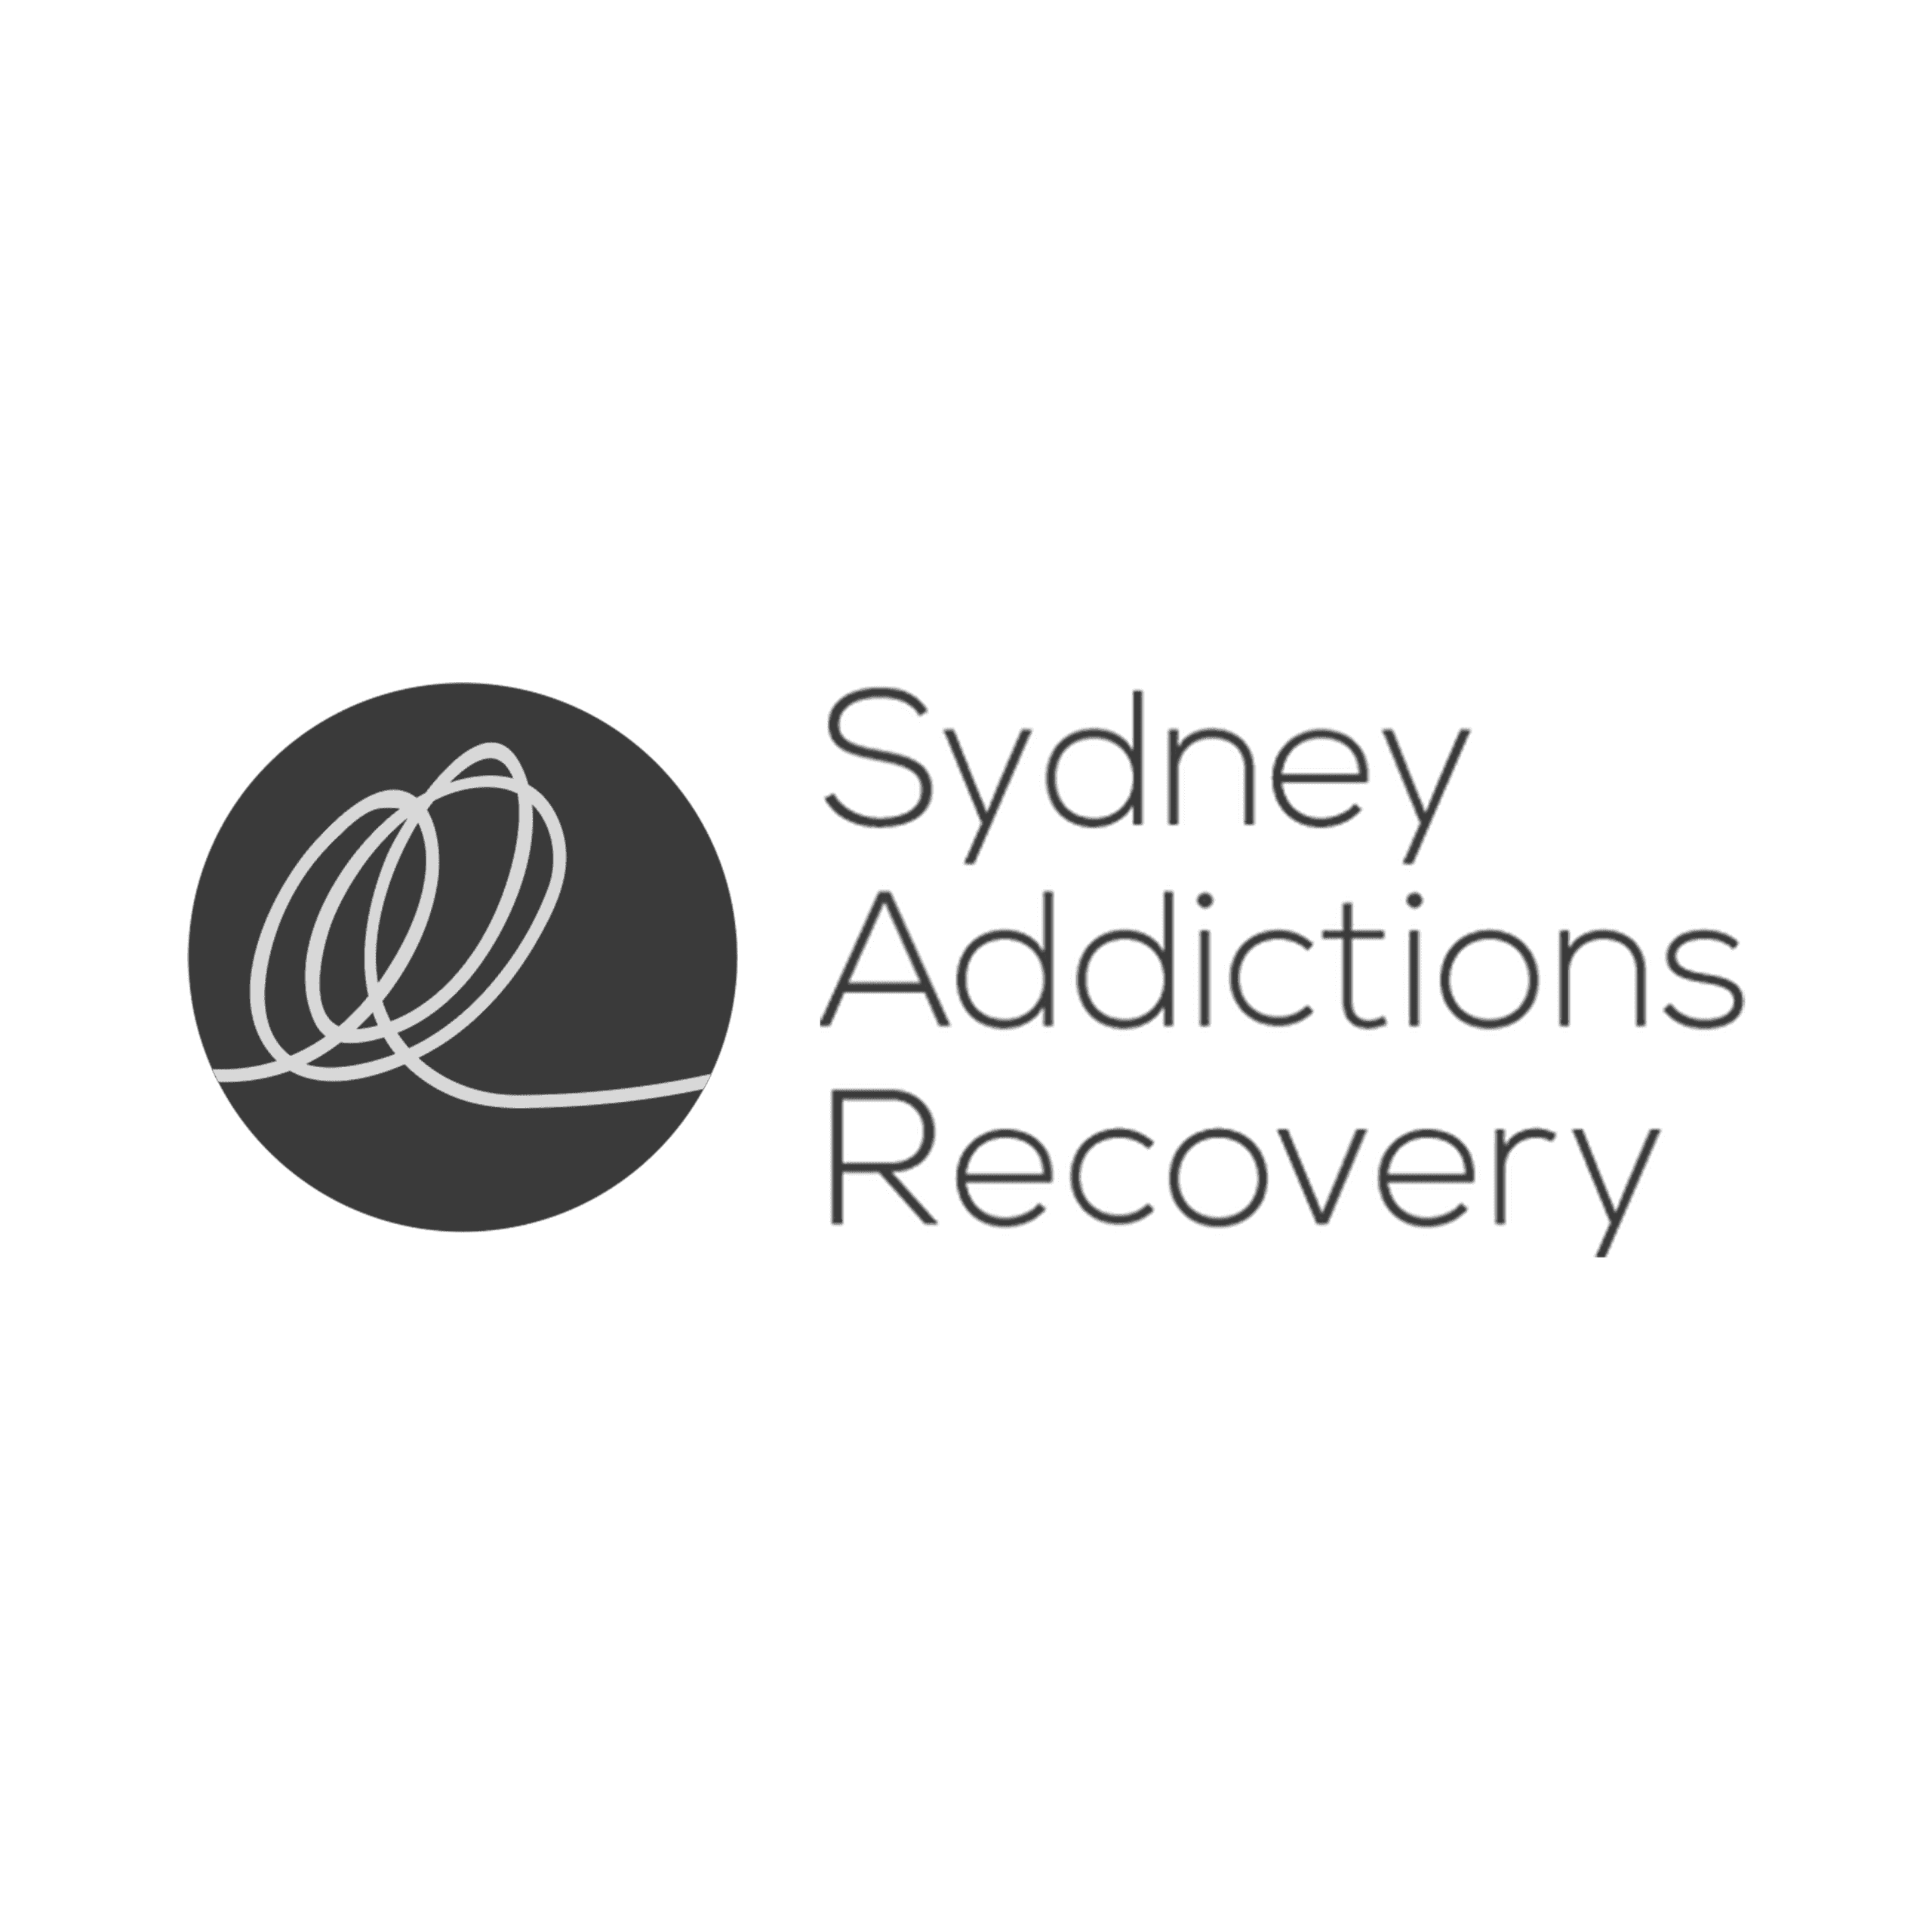 Sydney addictions recovery logo